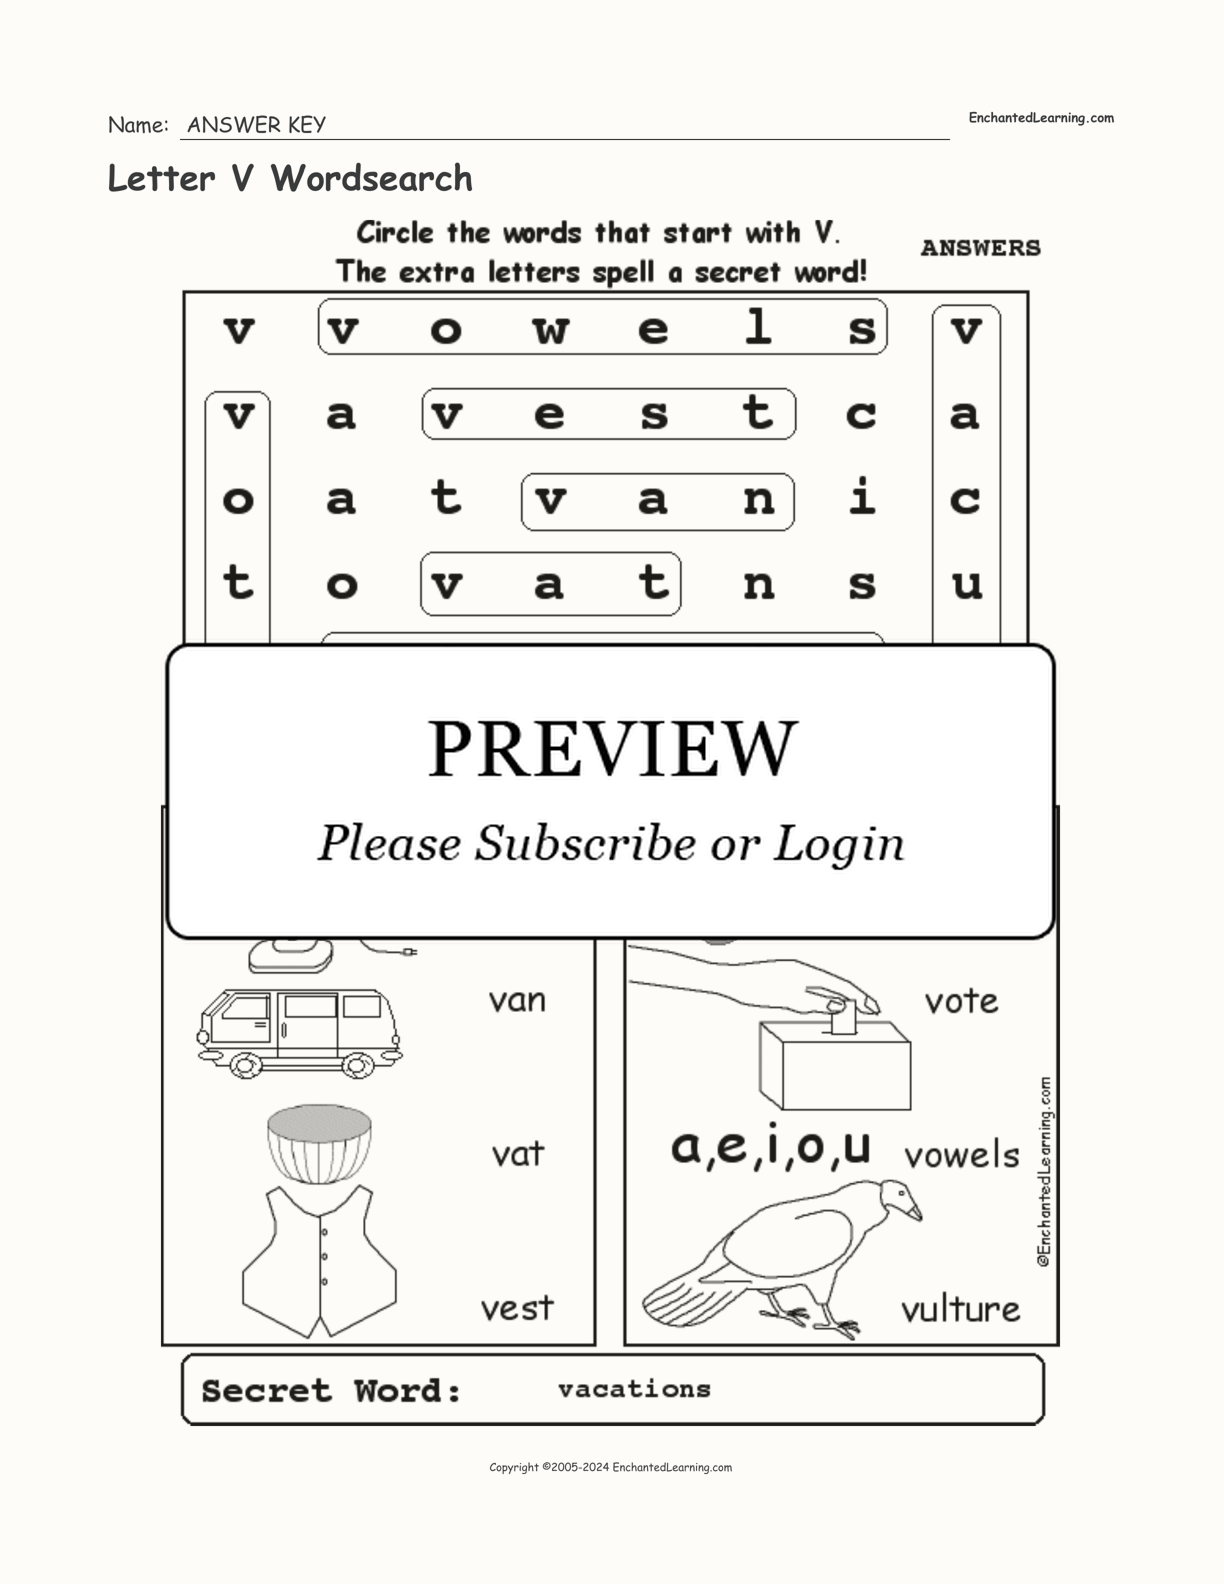 Letter V Wordsearch interactive worksheet page 2